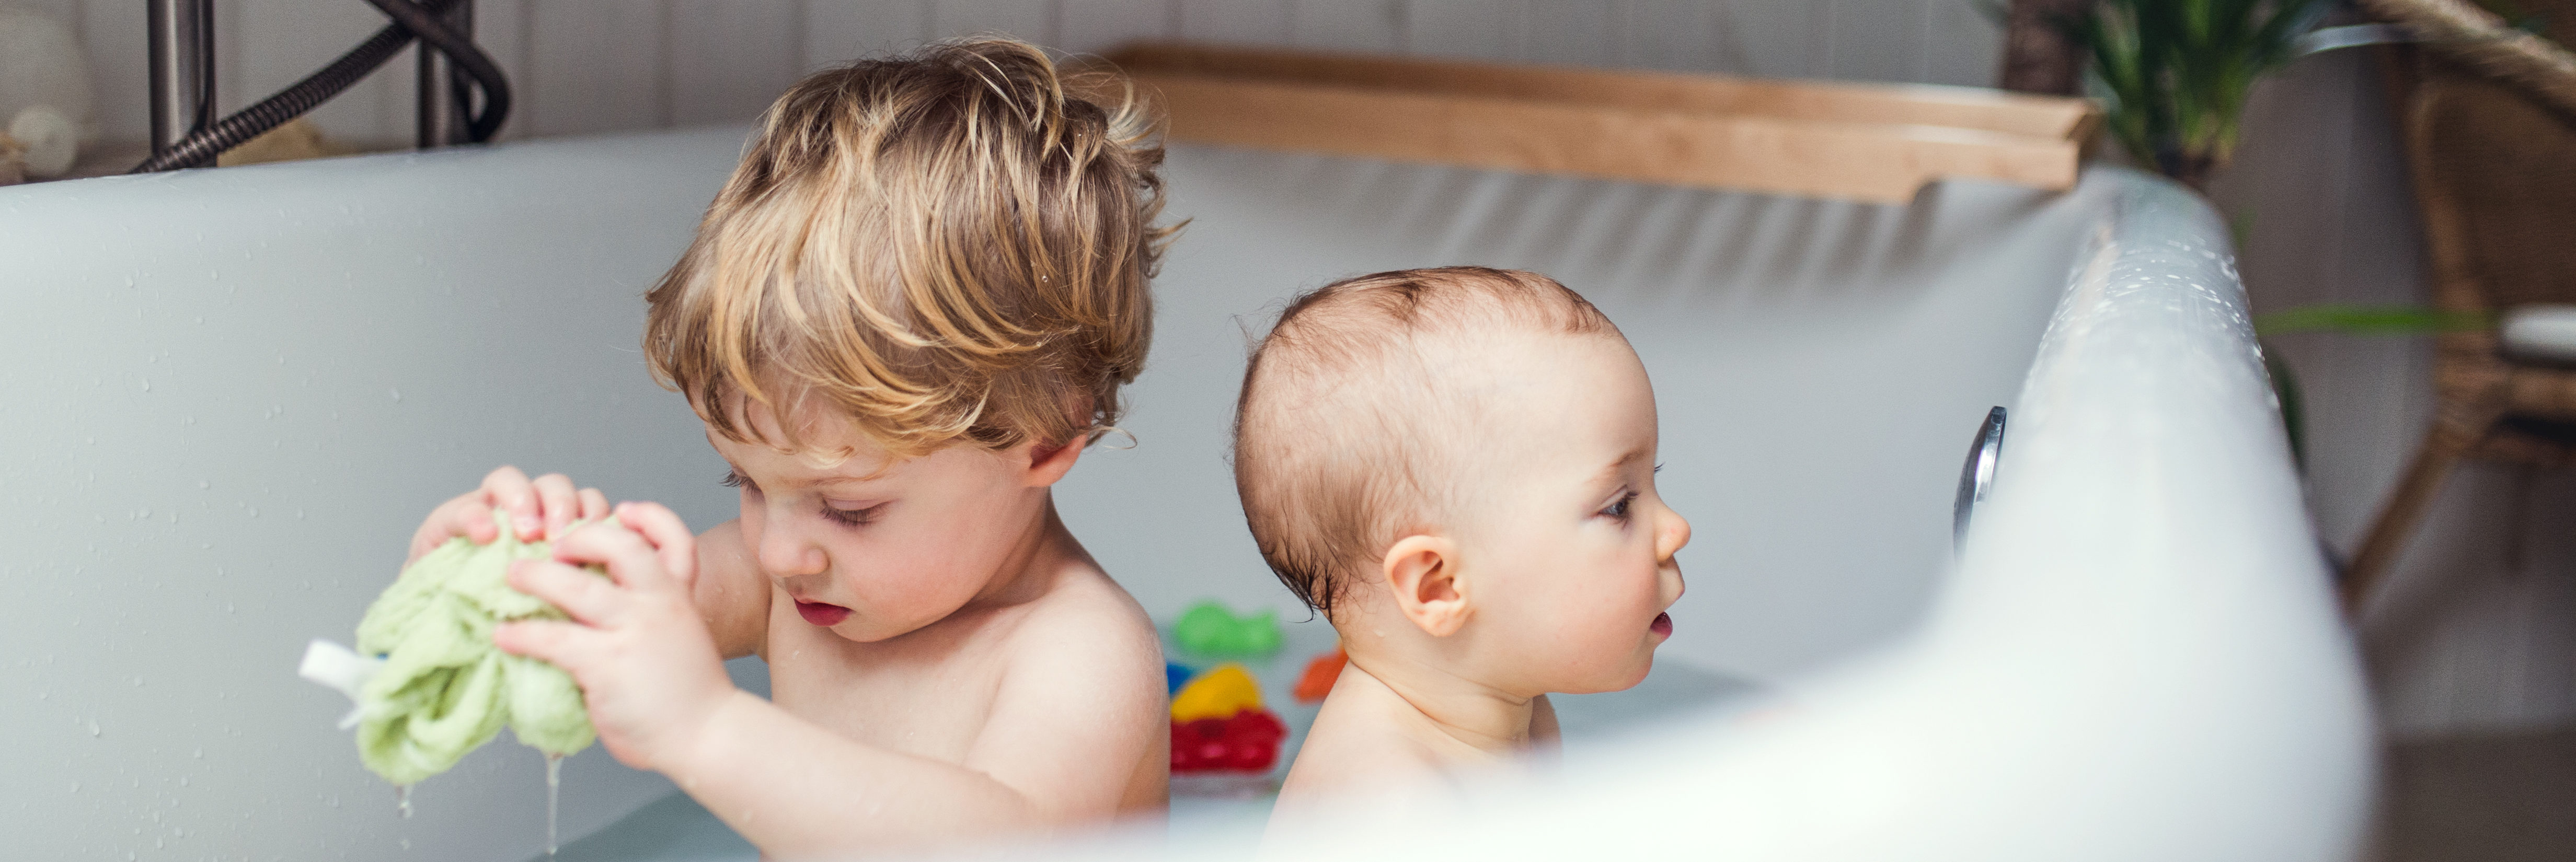 Two Toddler Children Having A Bath